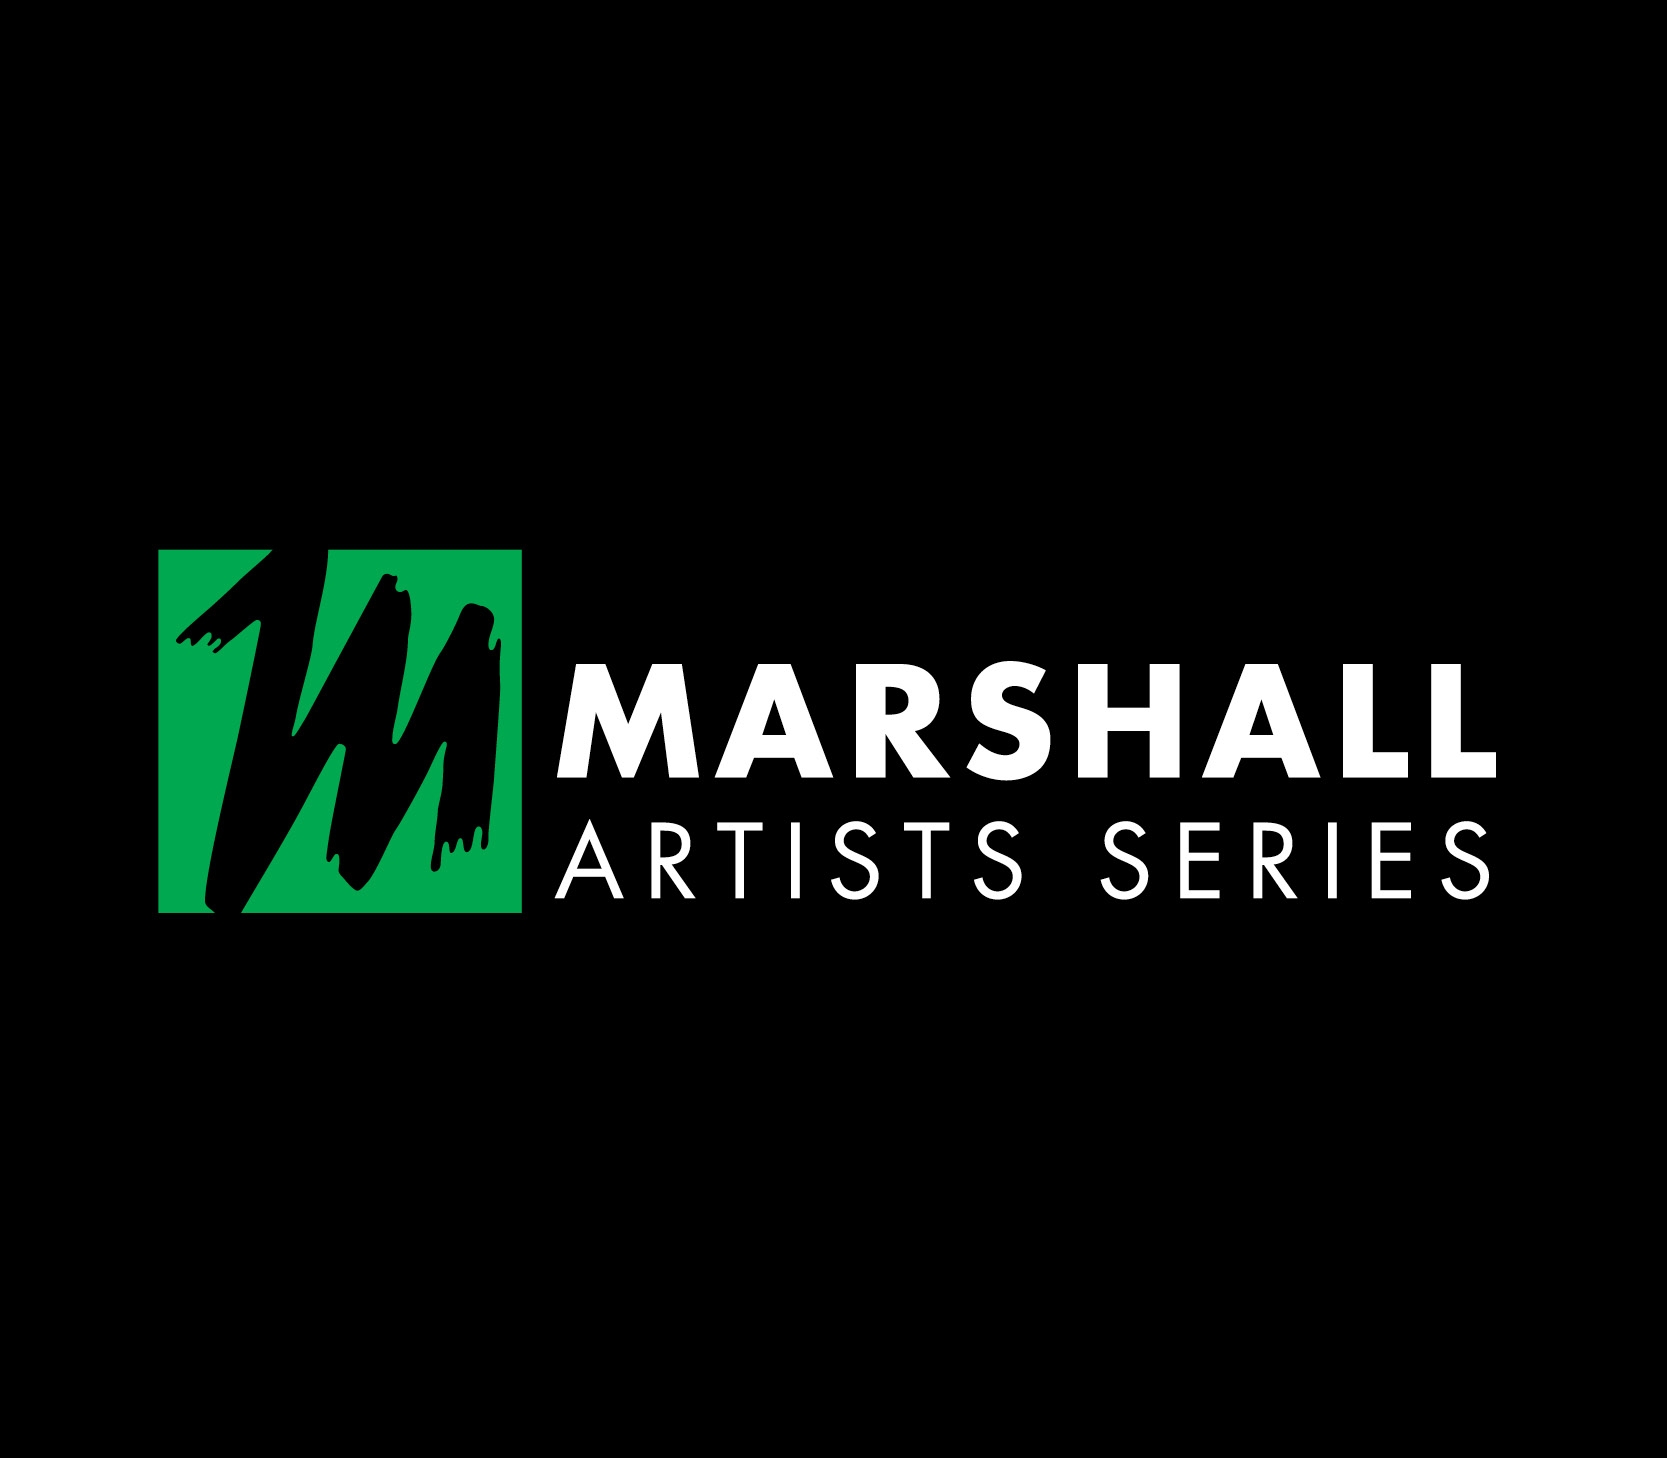 Marshall Artist Series Shows